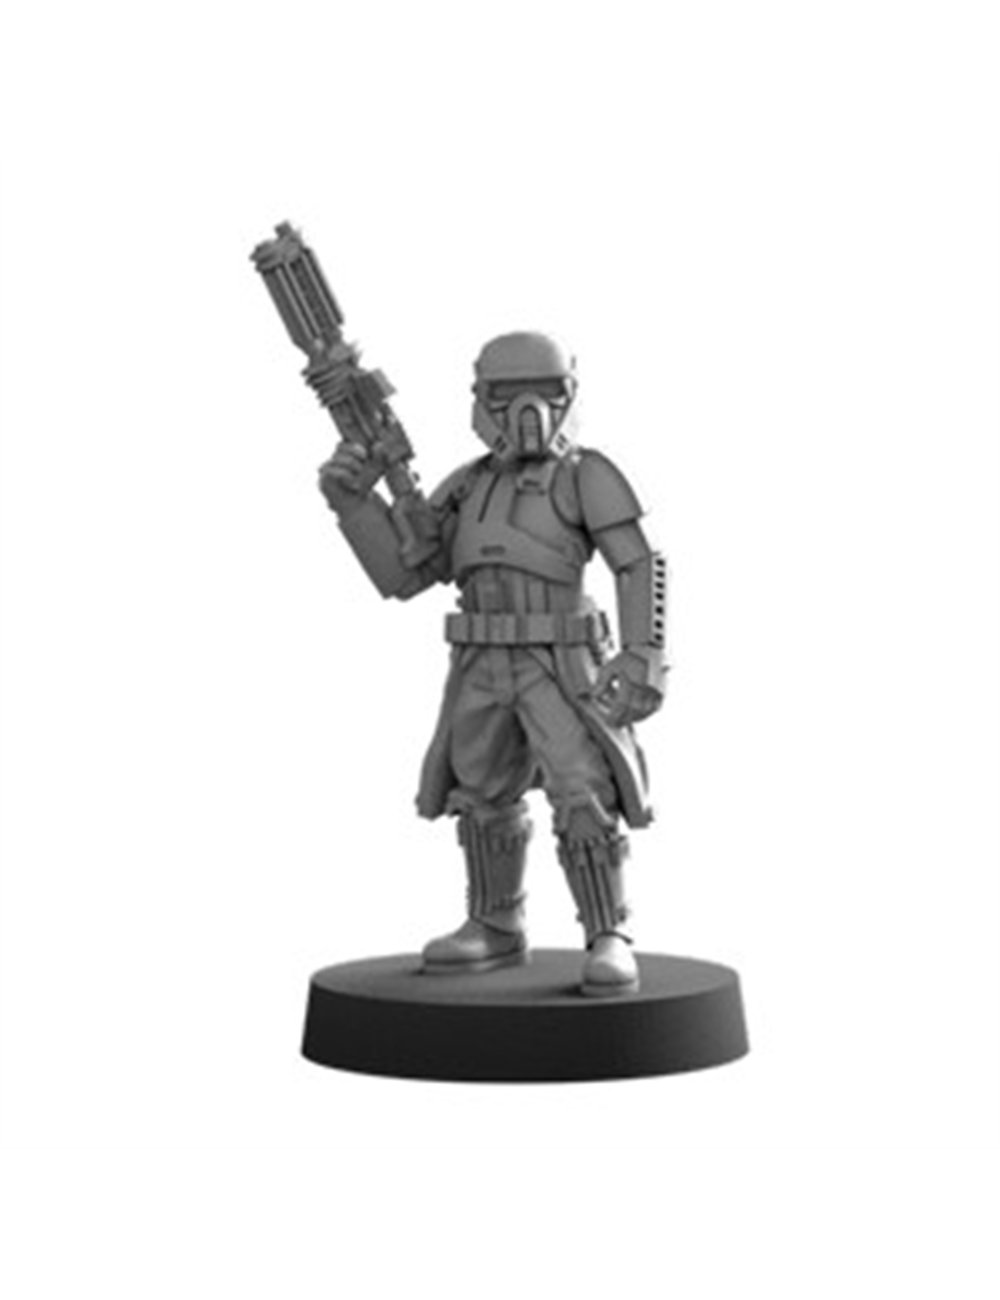 Imperial Shoretroopers Unit Expansion